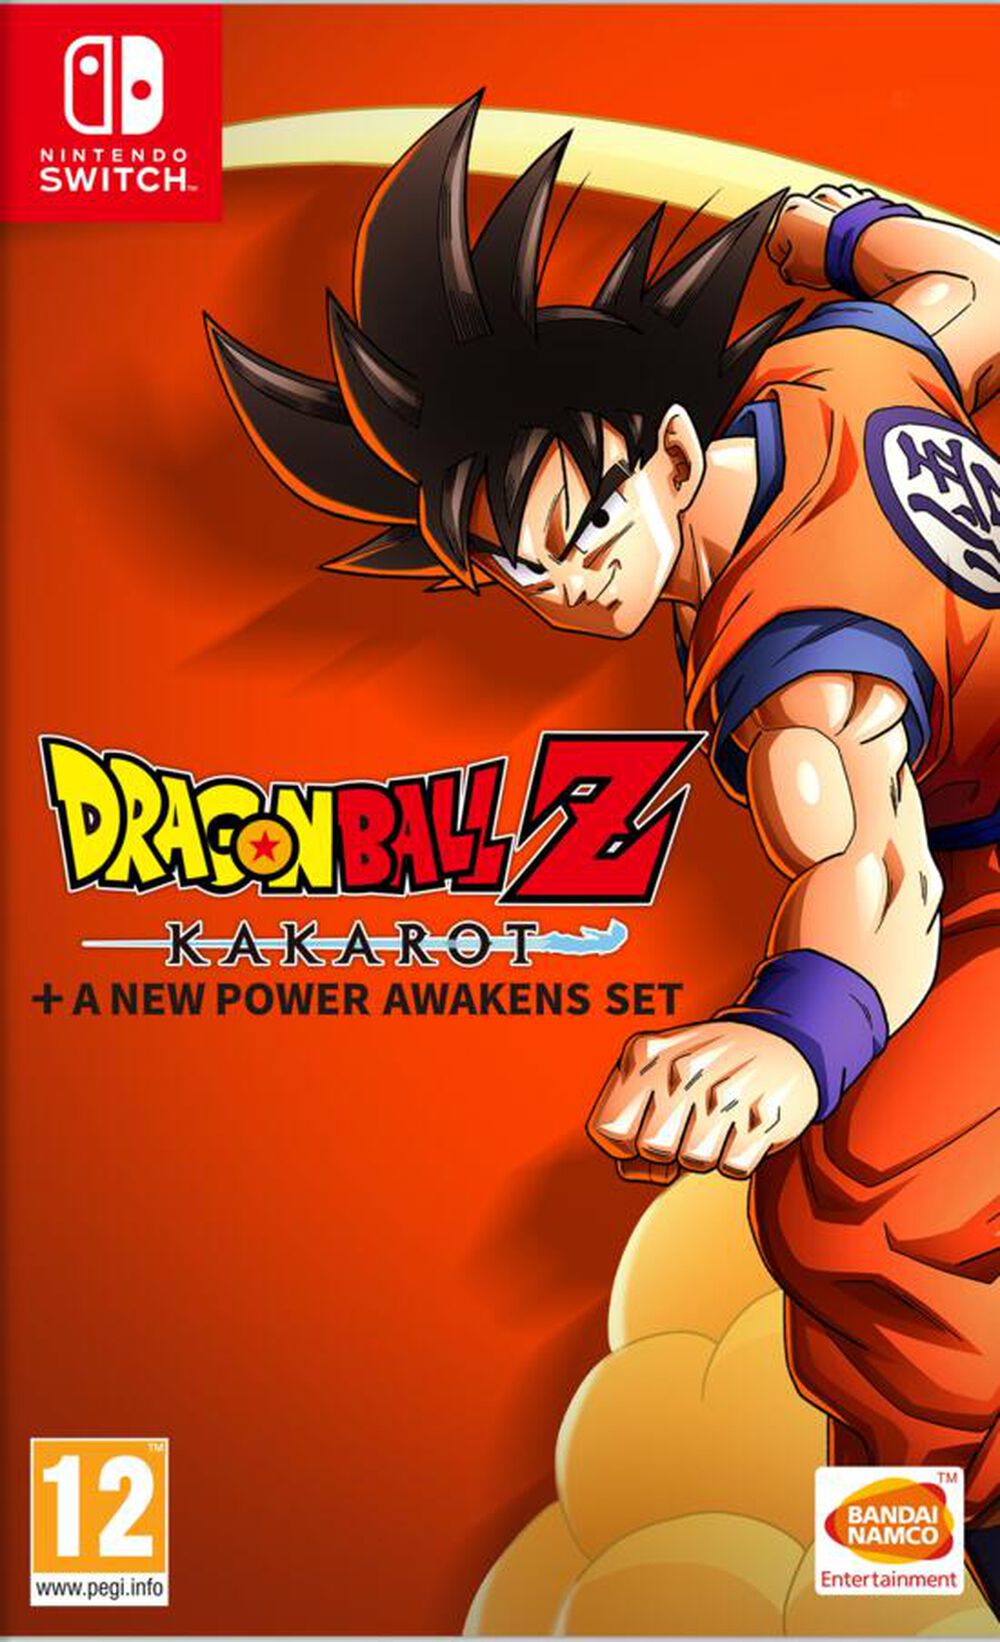 jaquette du jeu vidéo Dragon Ball Z Kakarot